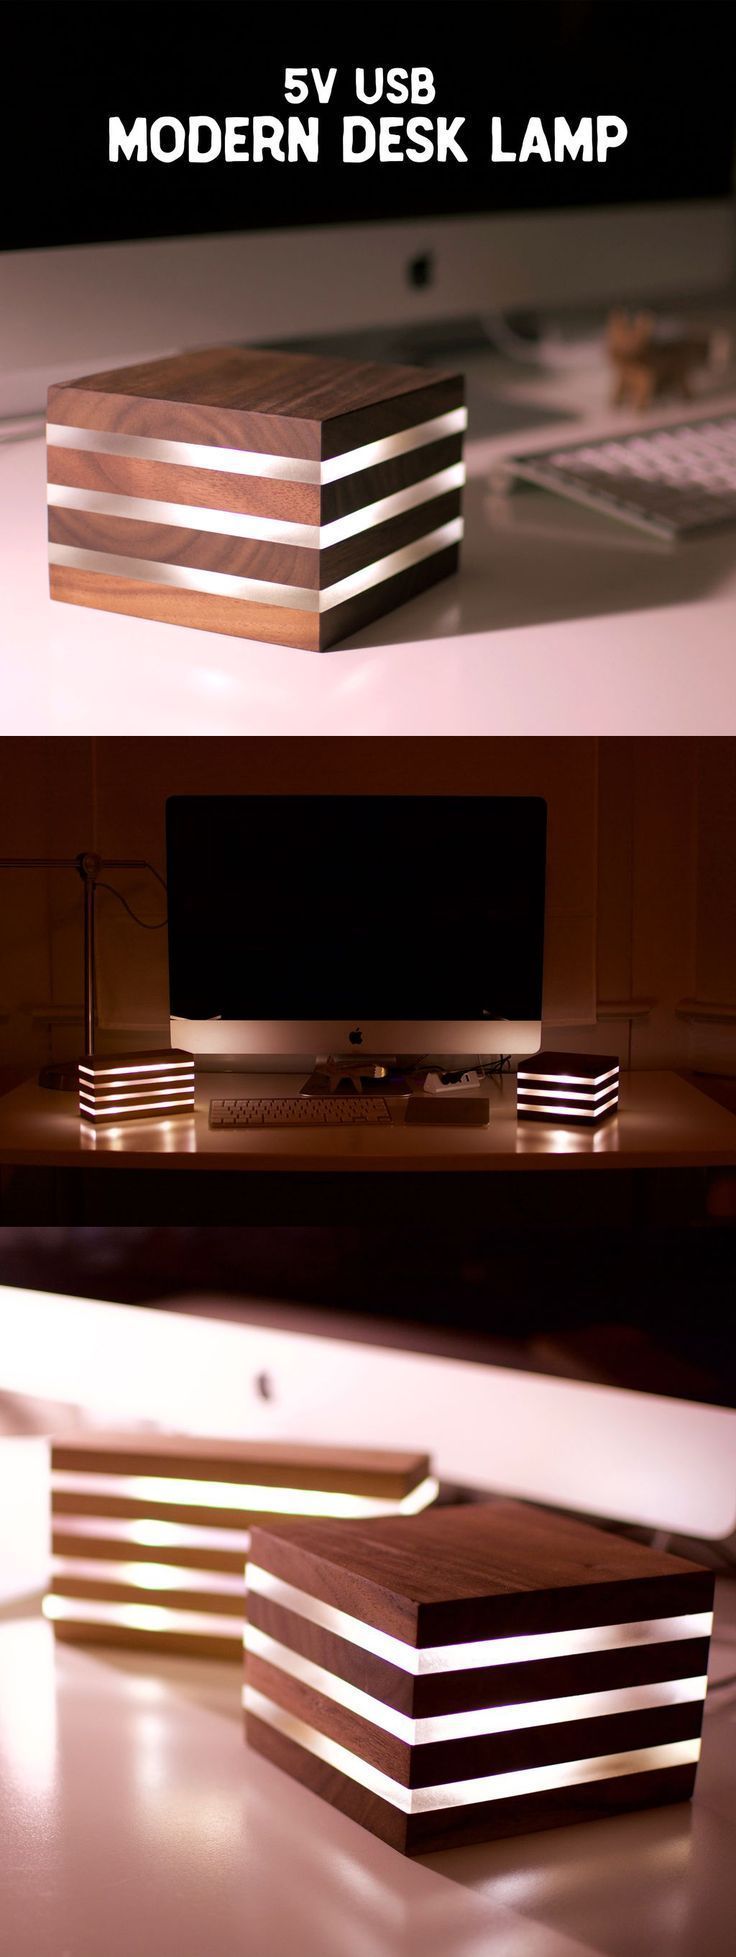 Moderne LED Schreibtischlampe… Betrieb avec 5V USB – # 5V # Betrieb avec #LE… #WoodWorking – Wood Design